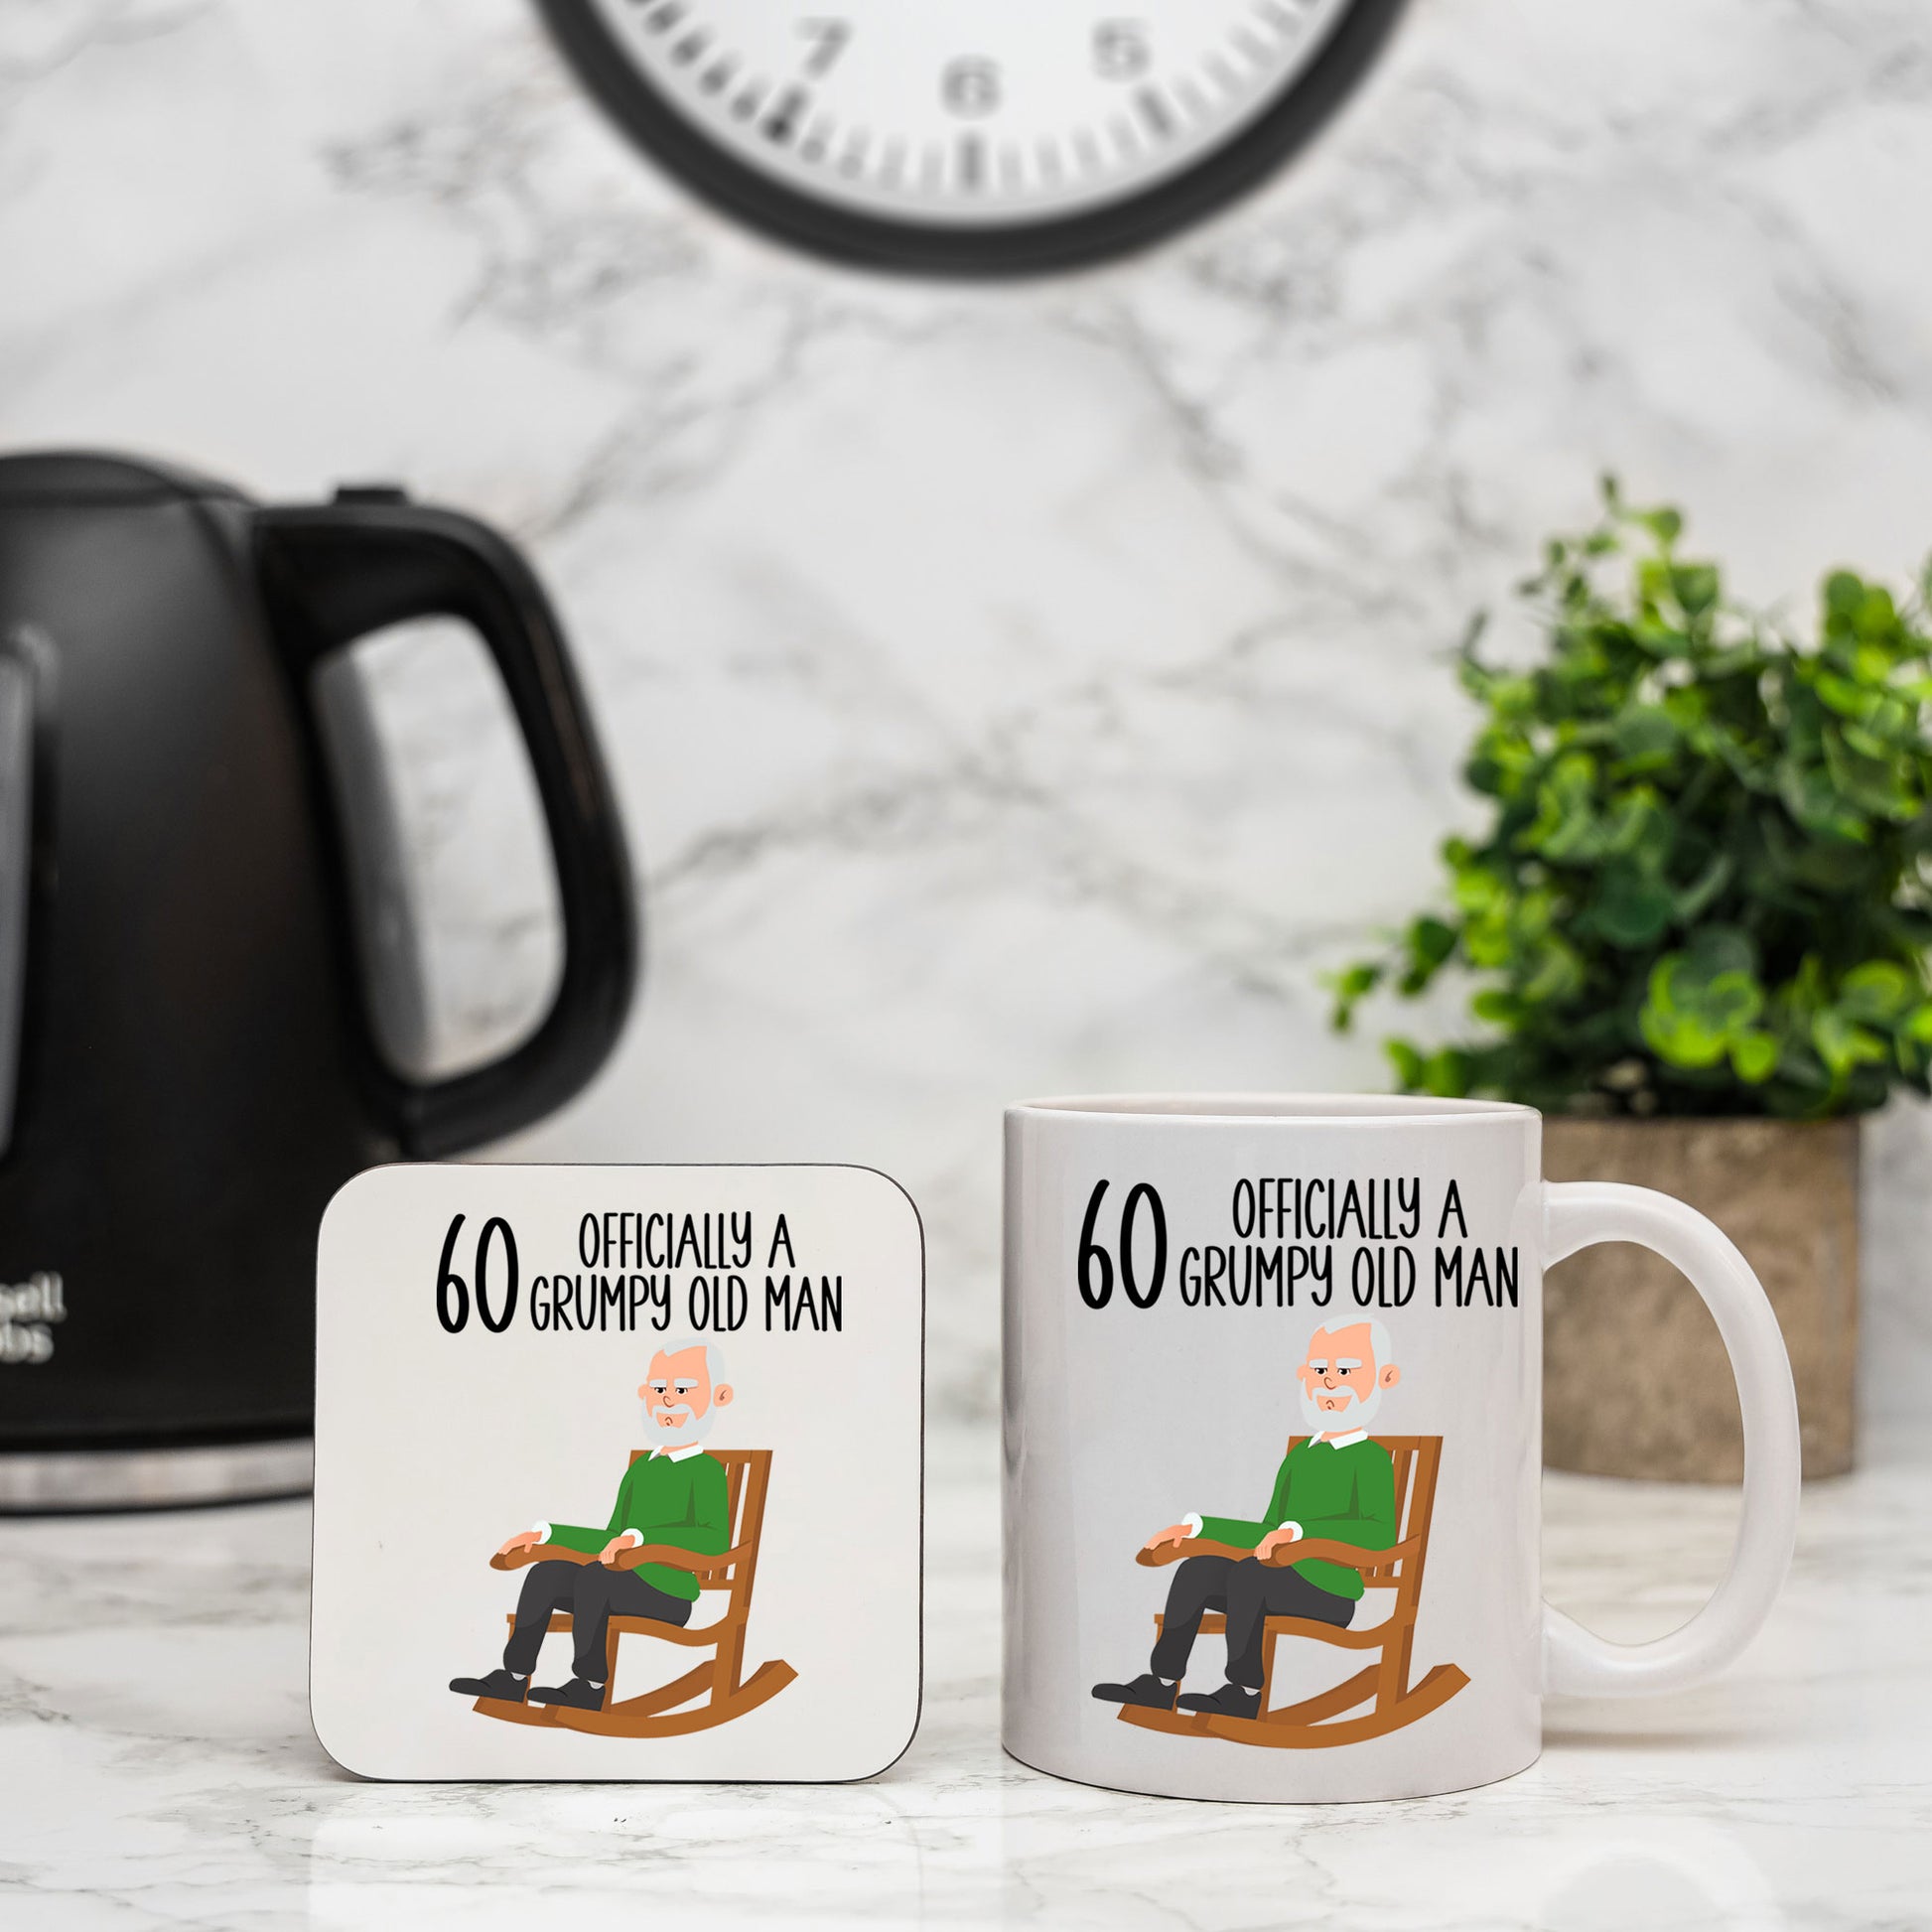 60 Officially A Grumpy Old Man Mug and/or Coaster Gift  - Always Looking Good - Mug & Coaster Set  